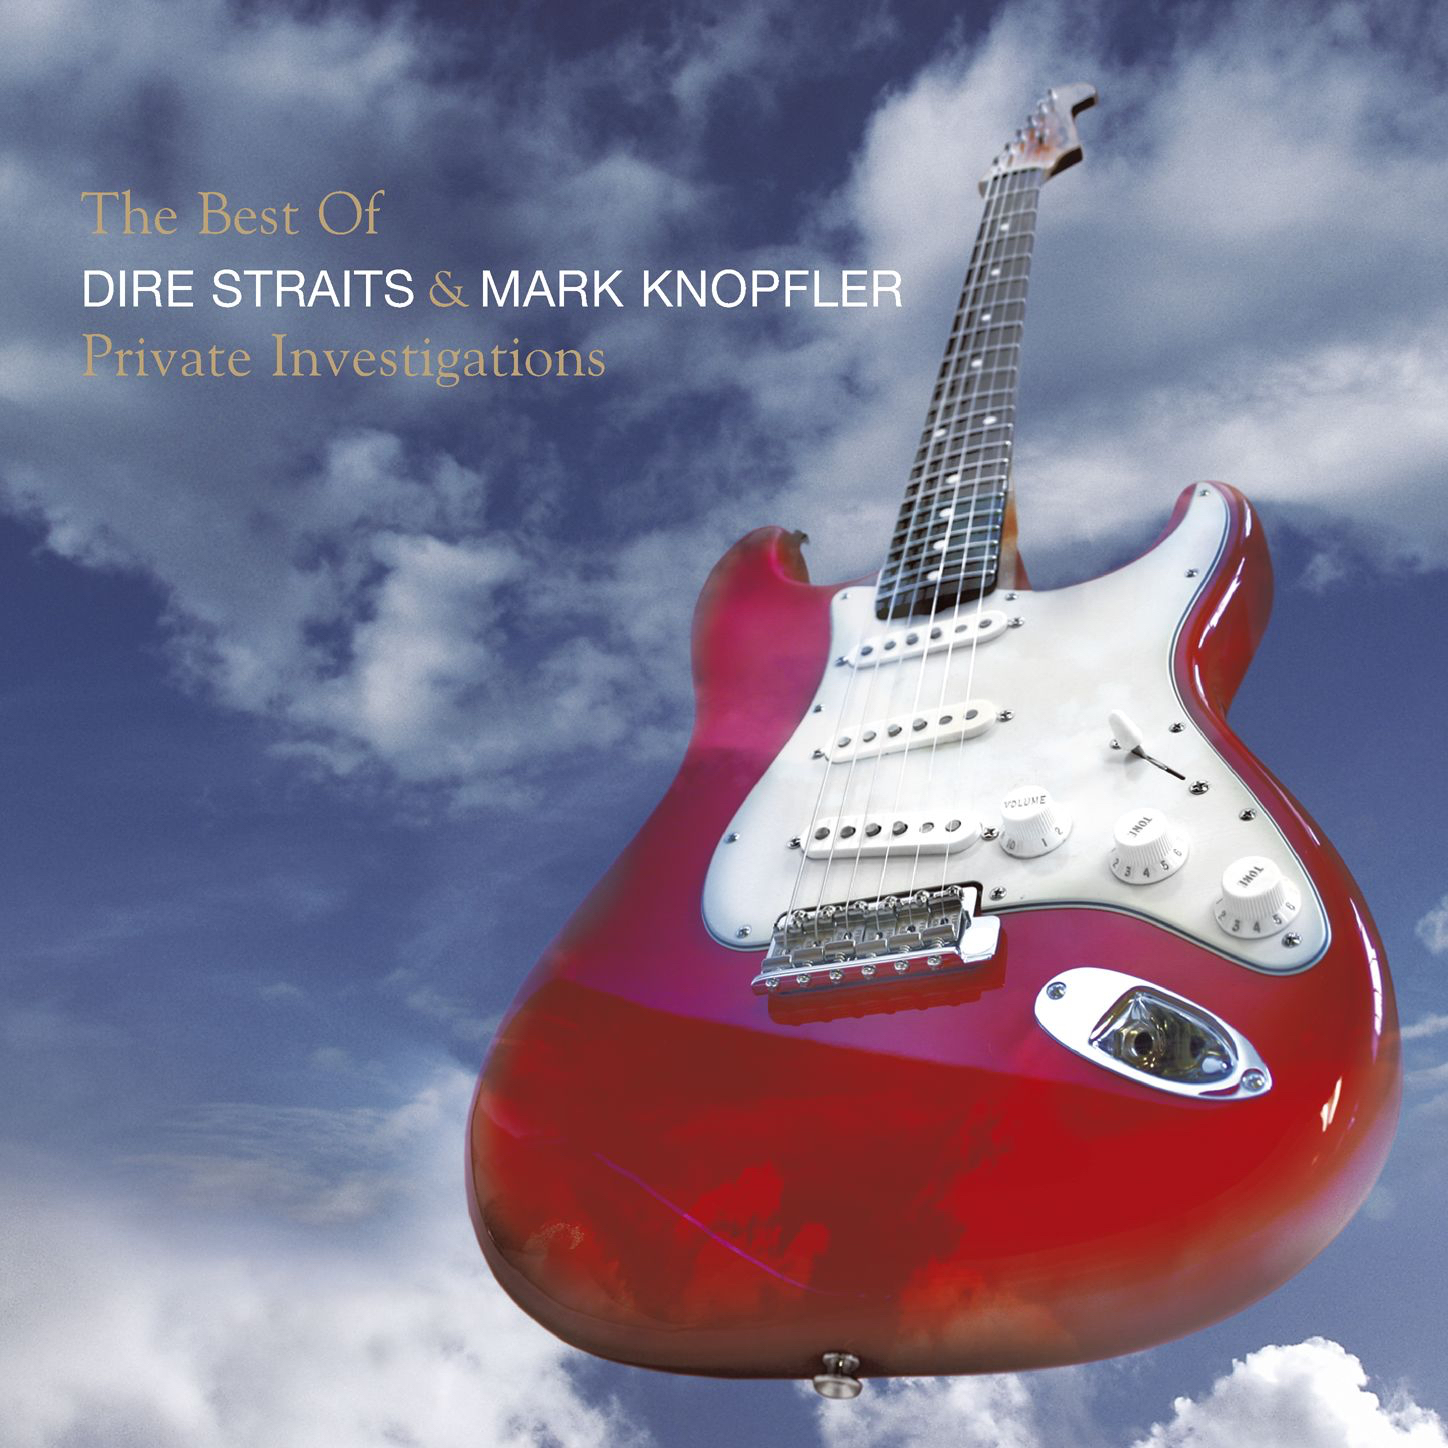 Telegraph Road歌词 歌手Dire Straits-专辑The Best of Dire Straits & Mark Knopfler-单曲《Telegraph Road》LRC歌词下载